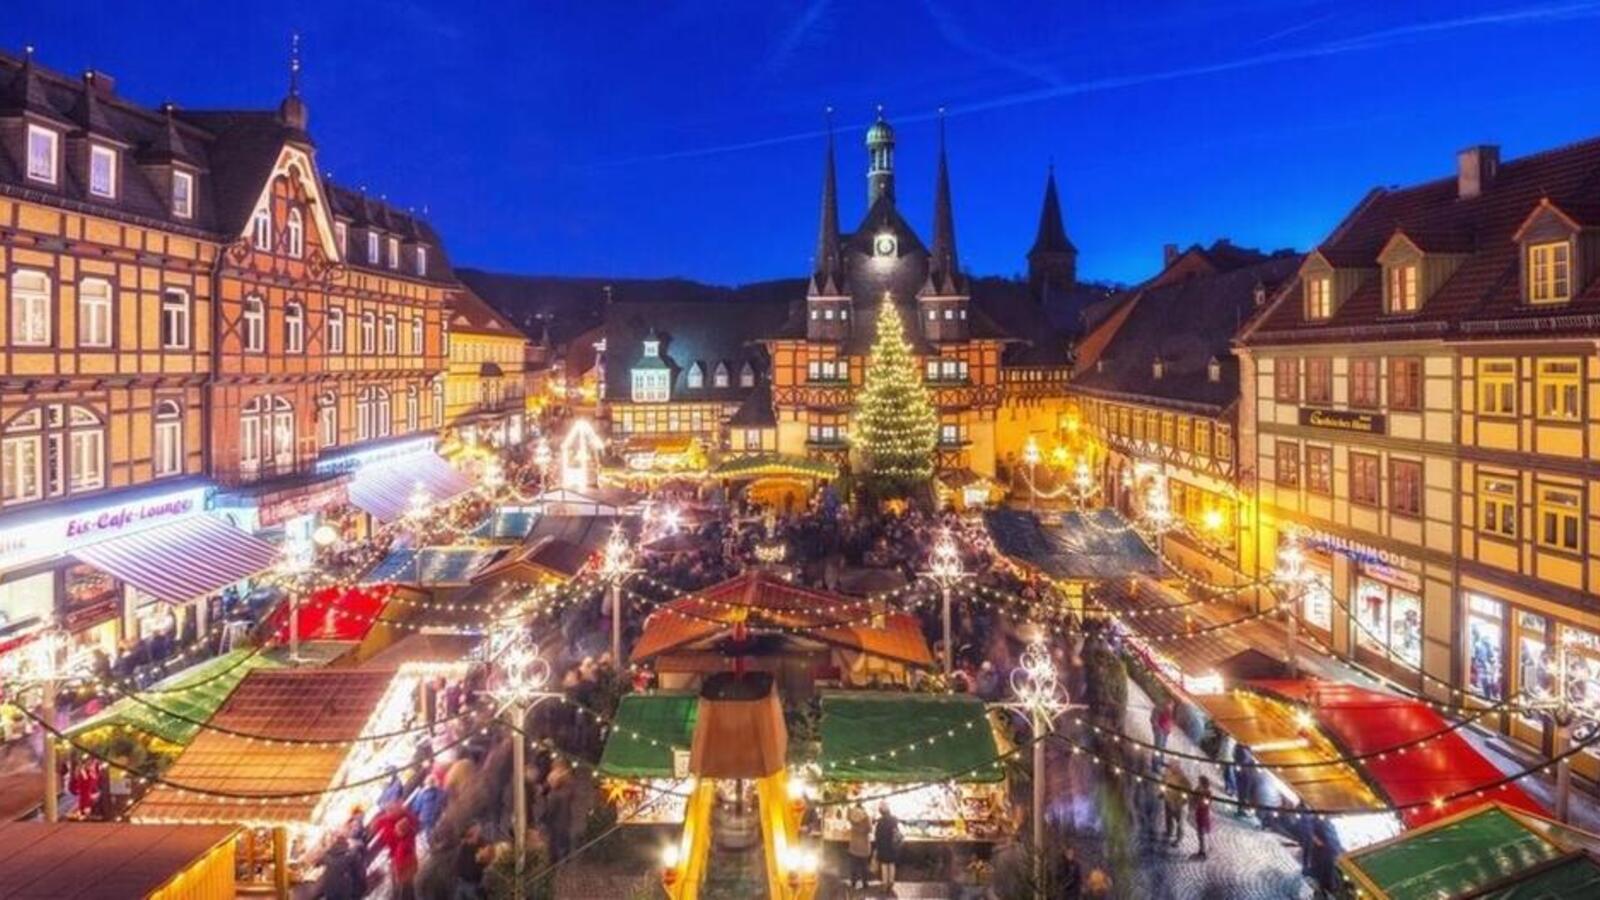 Wernigerode Christmas Market 